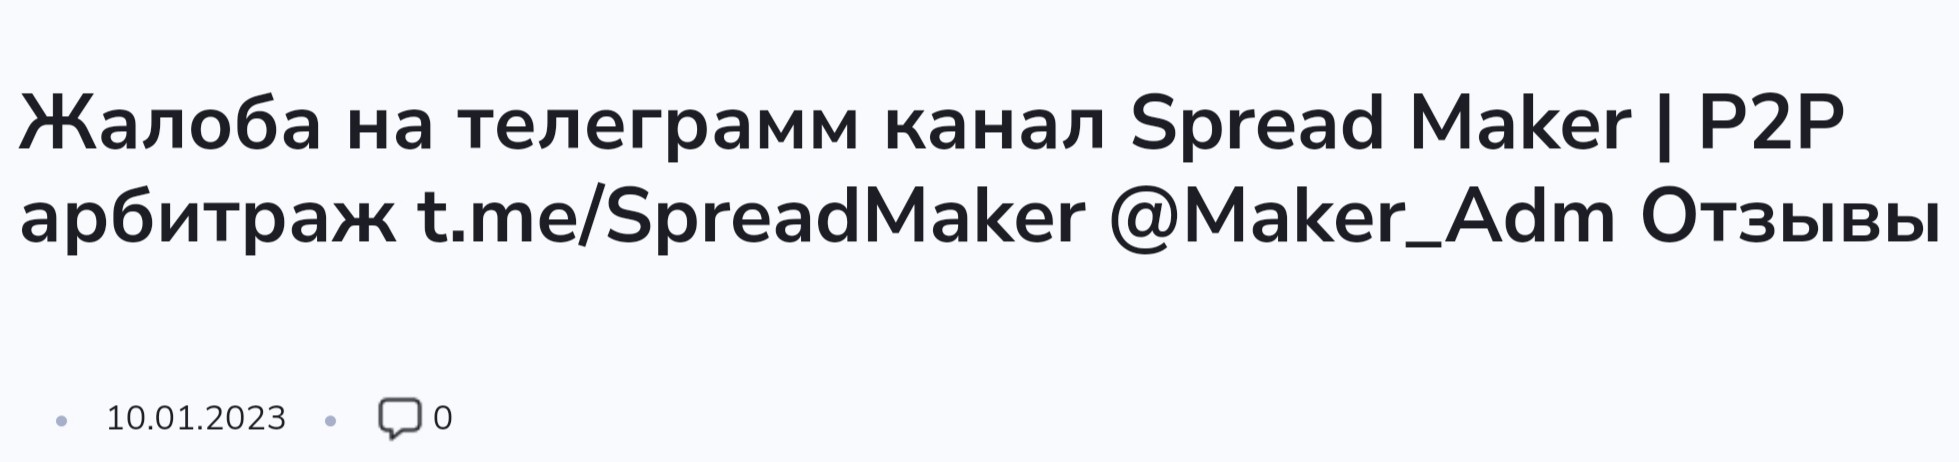 Отзывы о Spread Maker P2P